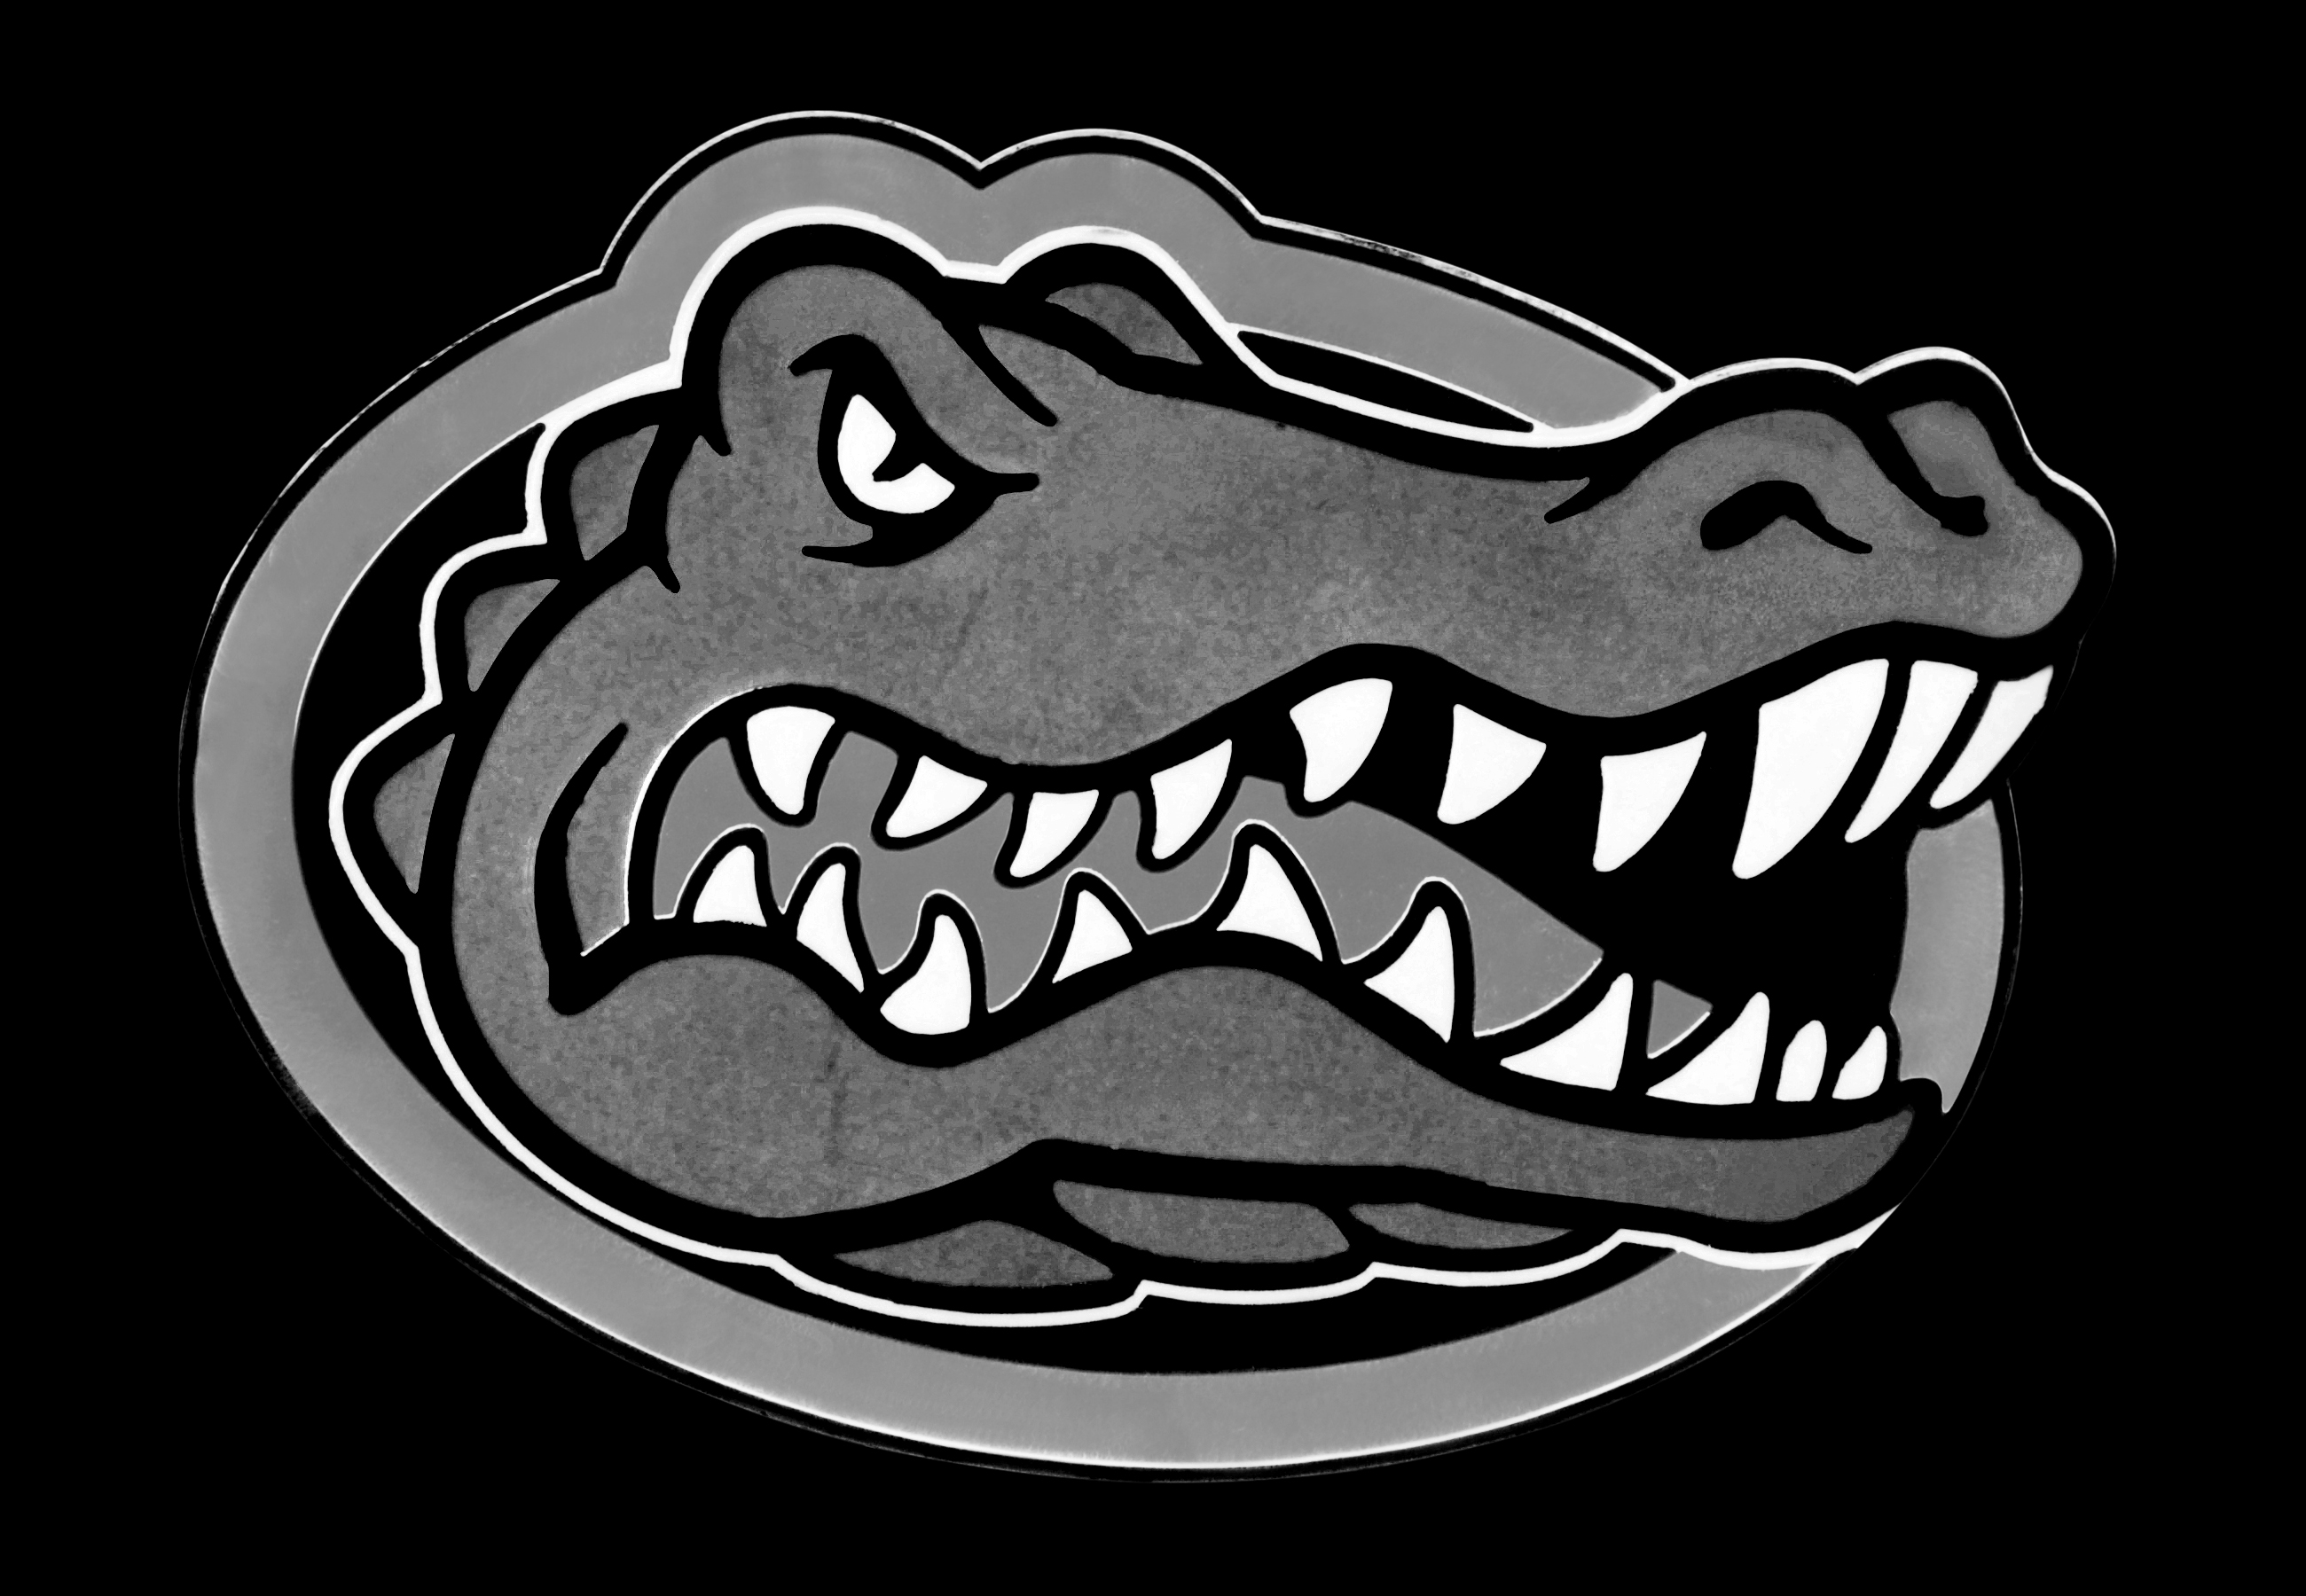 Meaning Florida Gators logo and symbol.